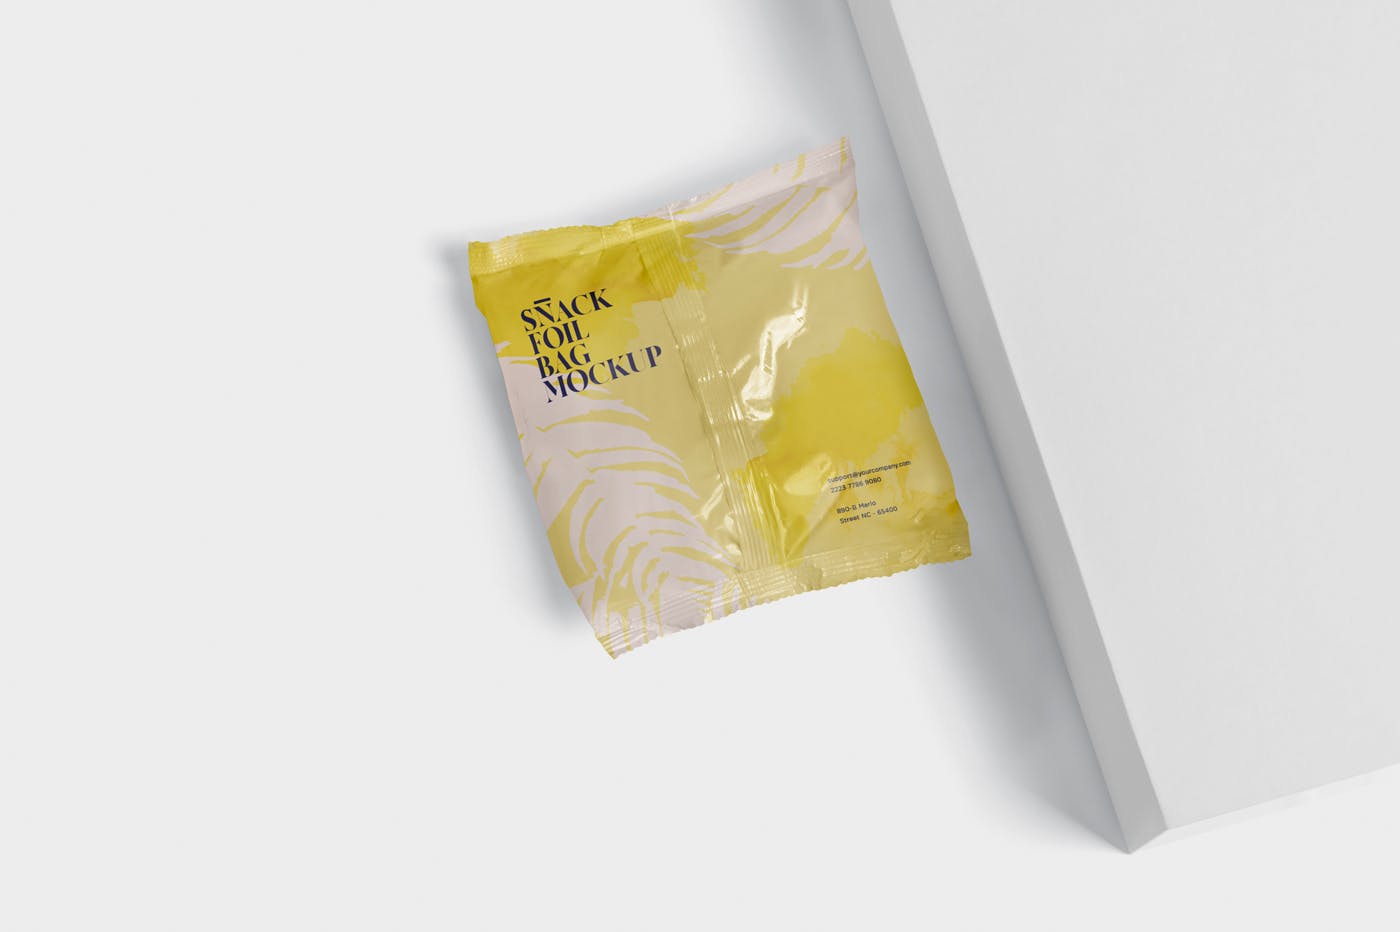 小吃零食铝箔包装袋设计图第一素材精选 Snack Foil Bag Mockup – Square Size – Small插图(5)